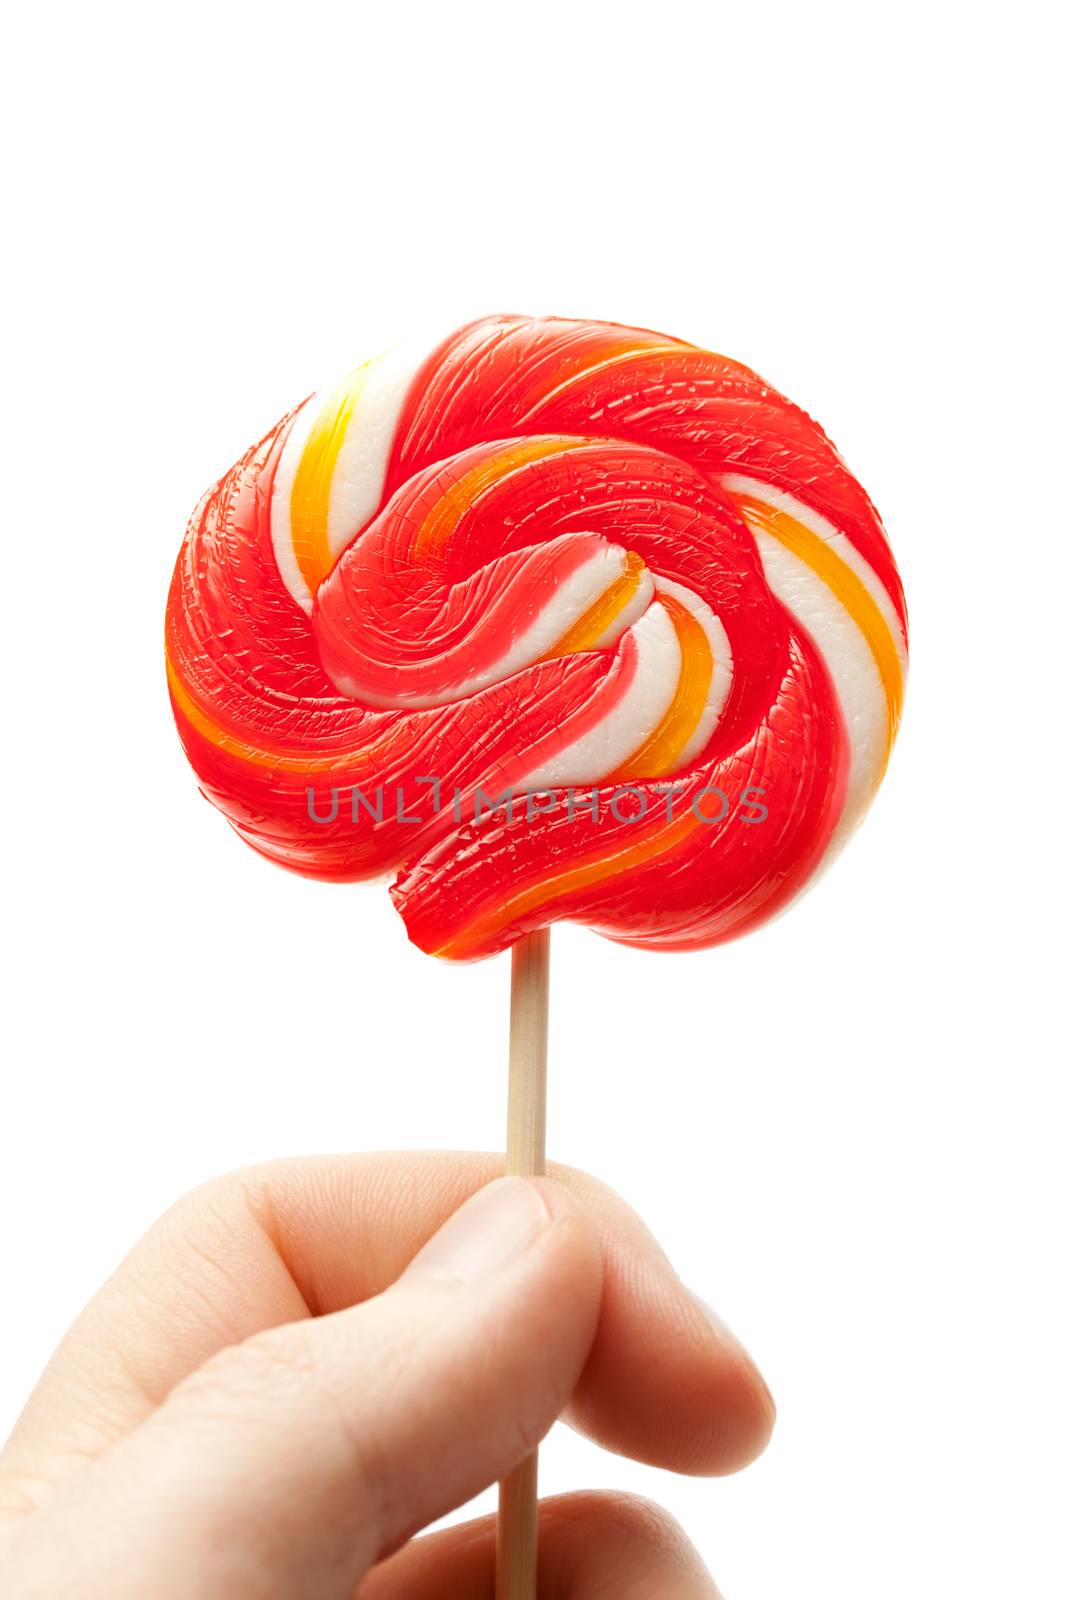 Bright lollipop candy in hand by Garsya